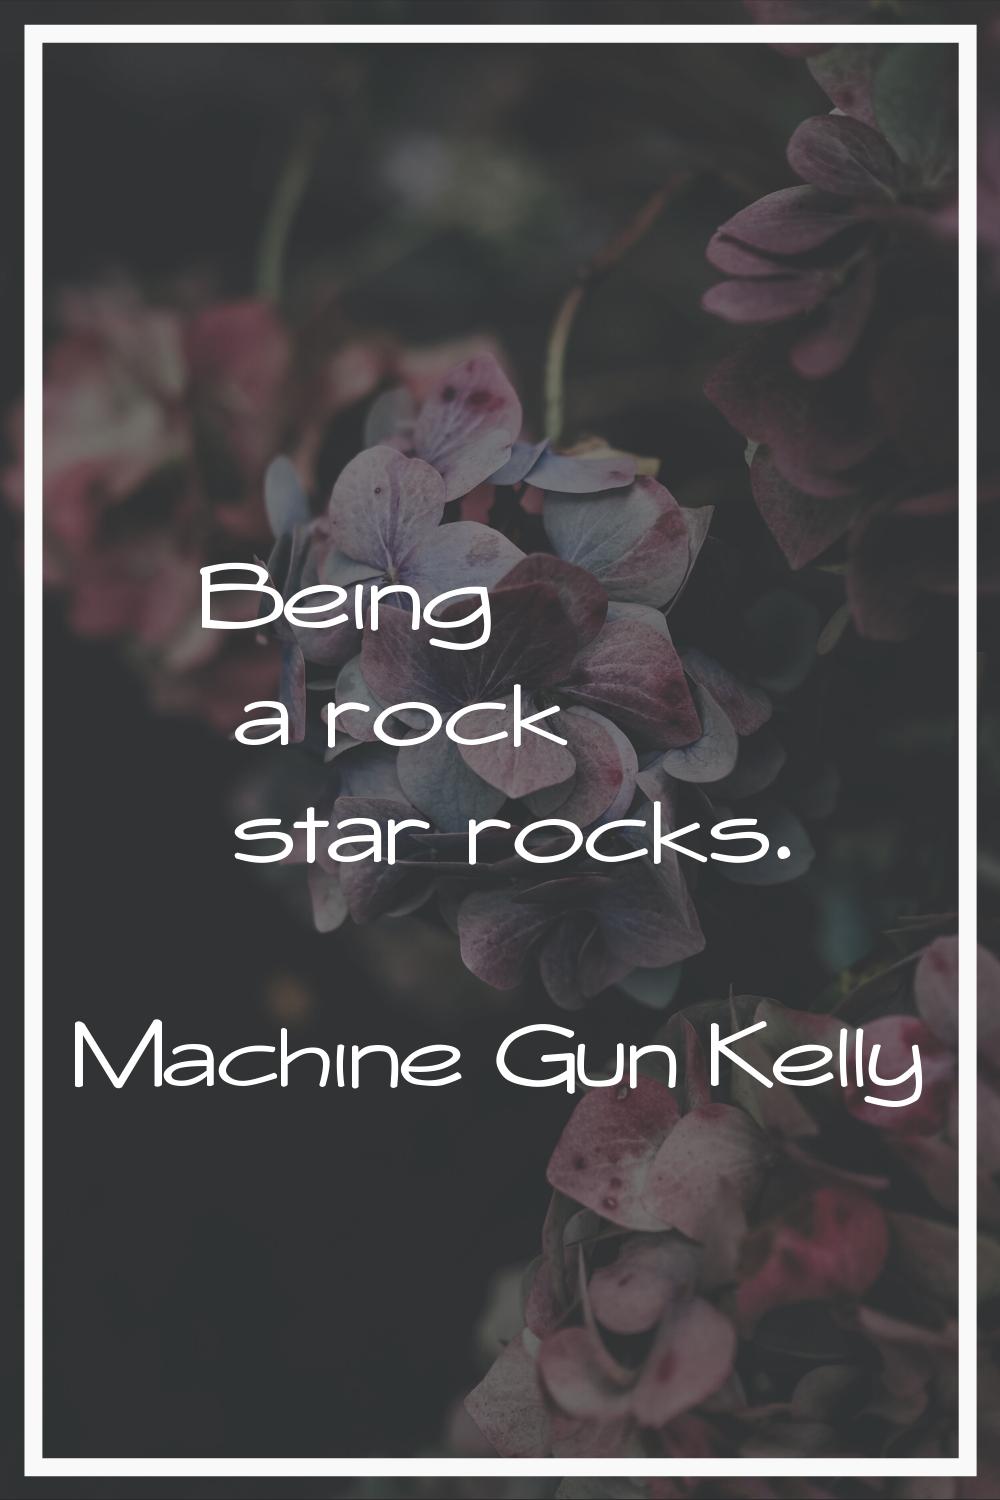 Being a rock star rocks.